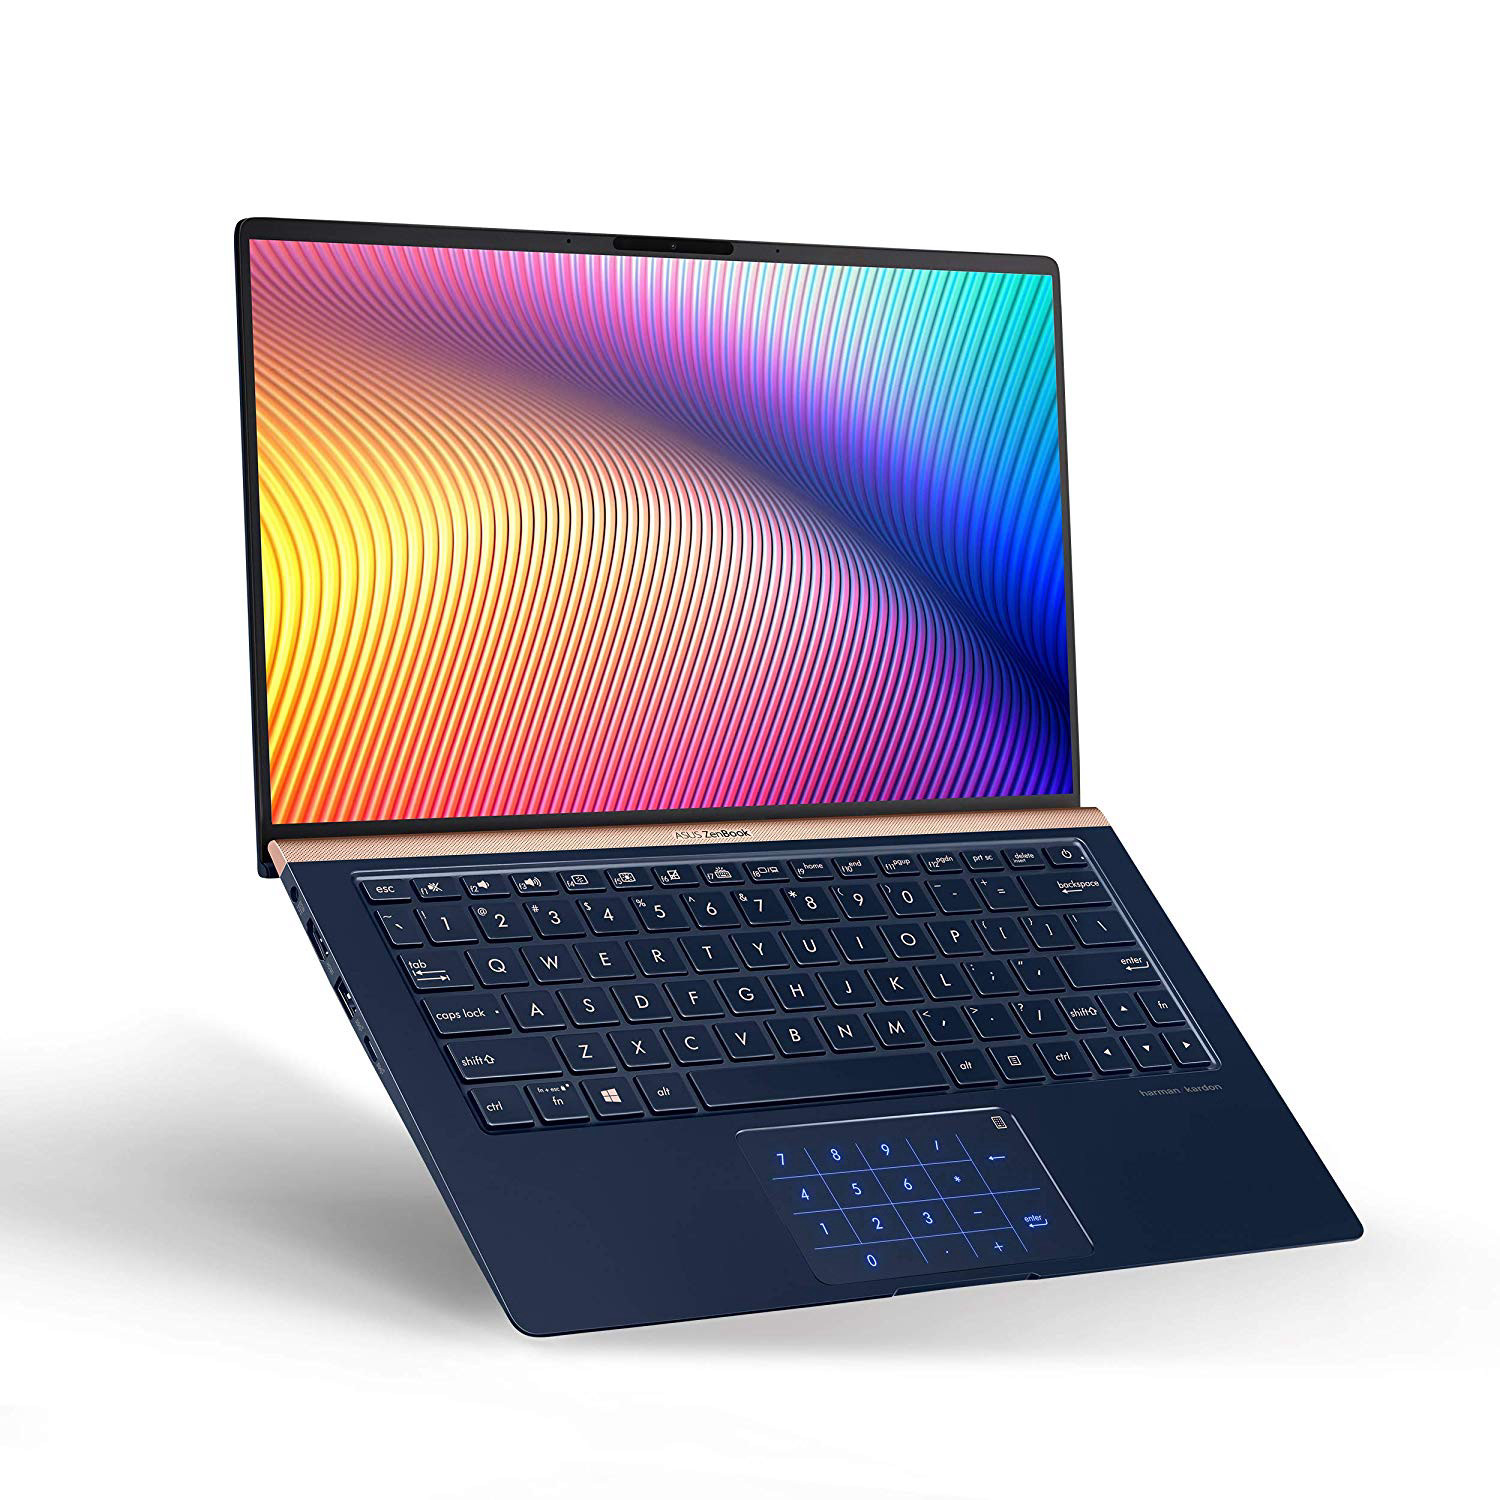 ASUS ZenBook 13 Ultra Slim Laptop, 13.3” FHD WideView, 8th-Gen Intel Core i7-8565U CPU, 16GB RAM, 512GB PCIe SSD, Backlit KB, NumberPad, Military Grade, TPM, Windows 10 Pro, UX333FA-AB77, Royal Blue